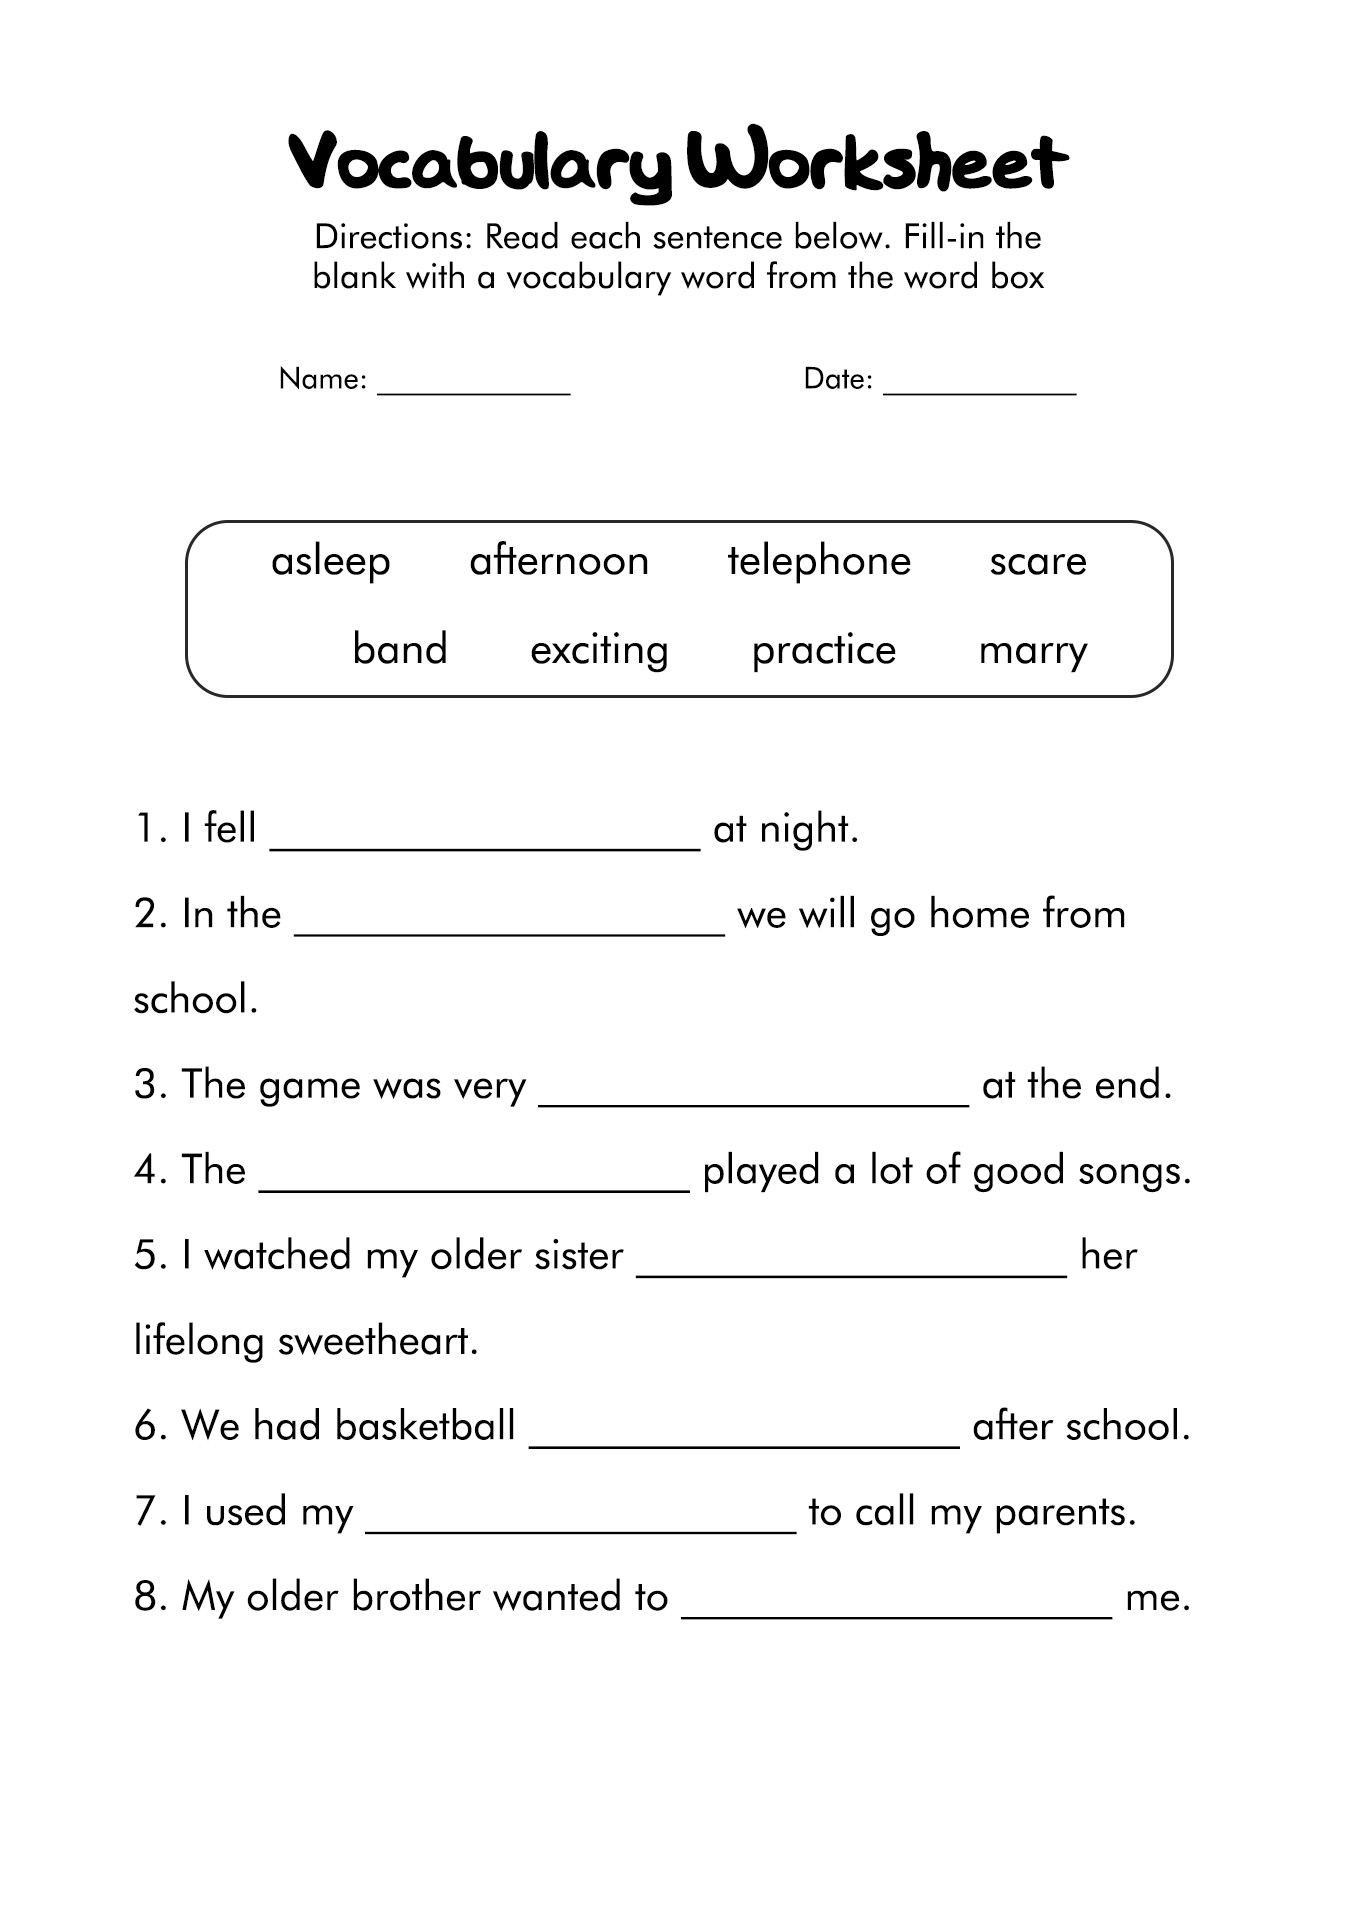 18 Best Images Of 7th Grade Vocabulary Worksheets Worksheeto